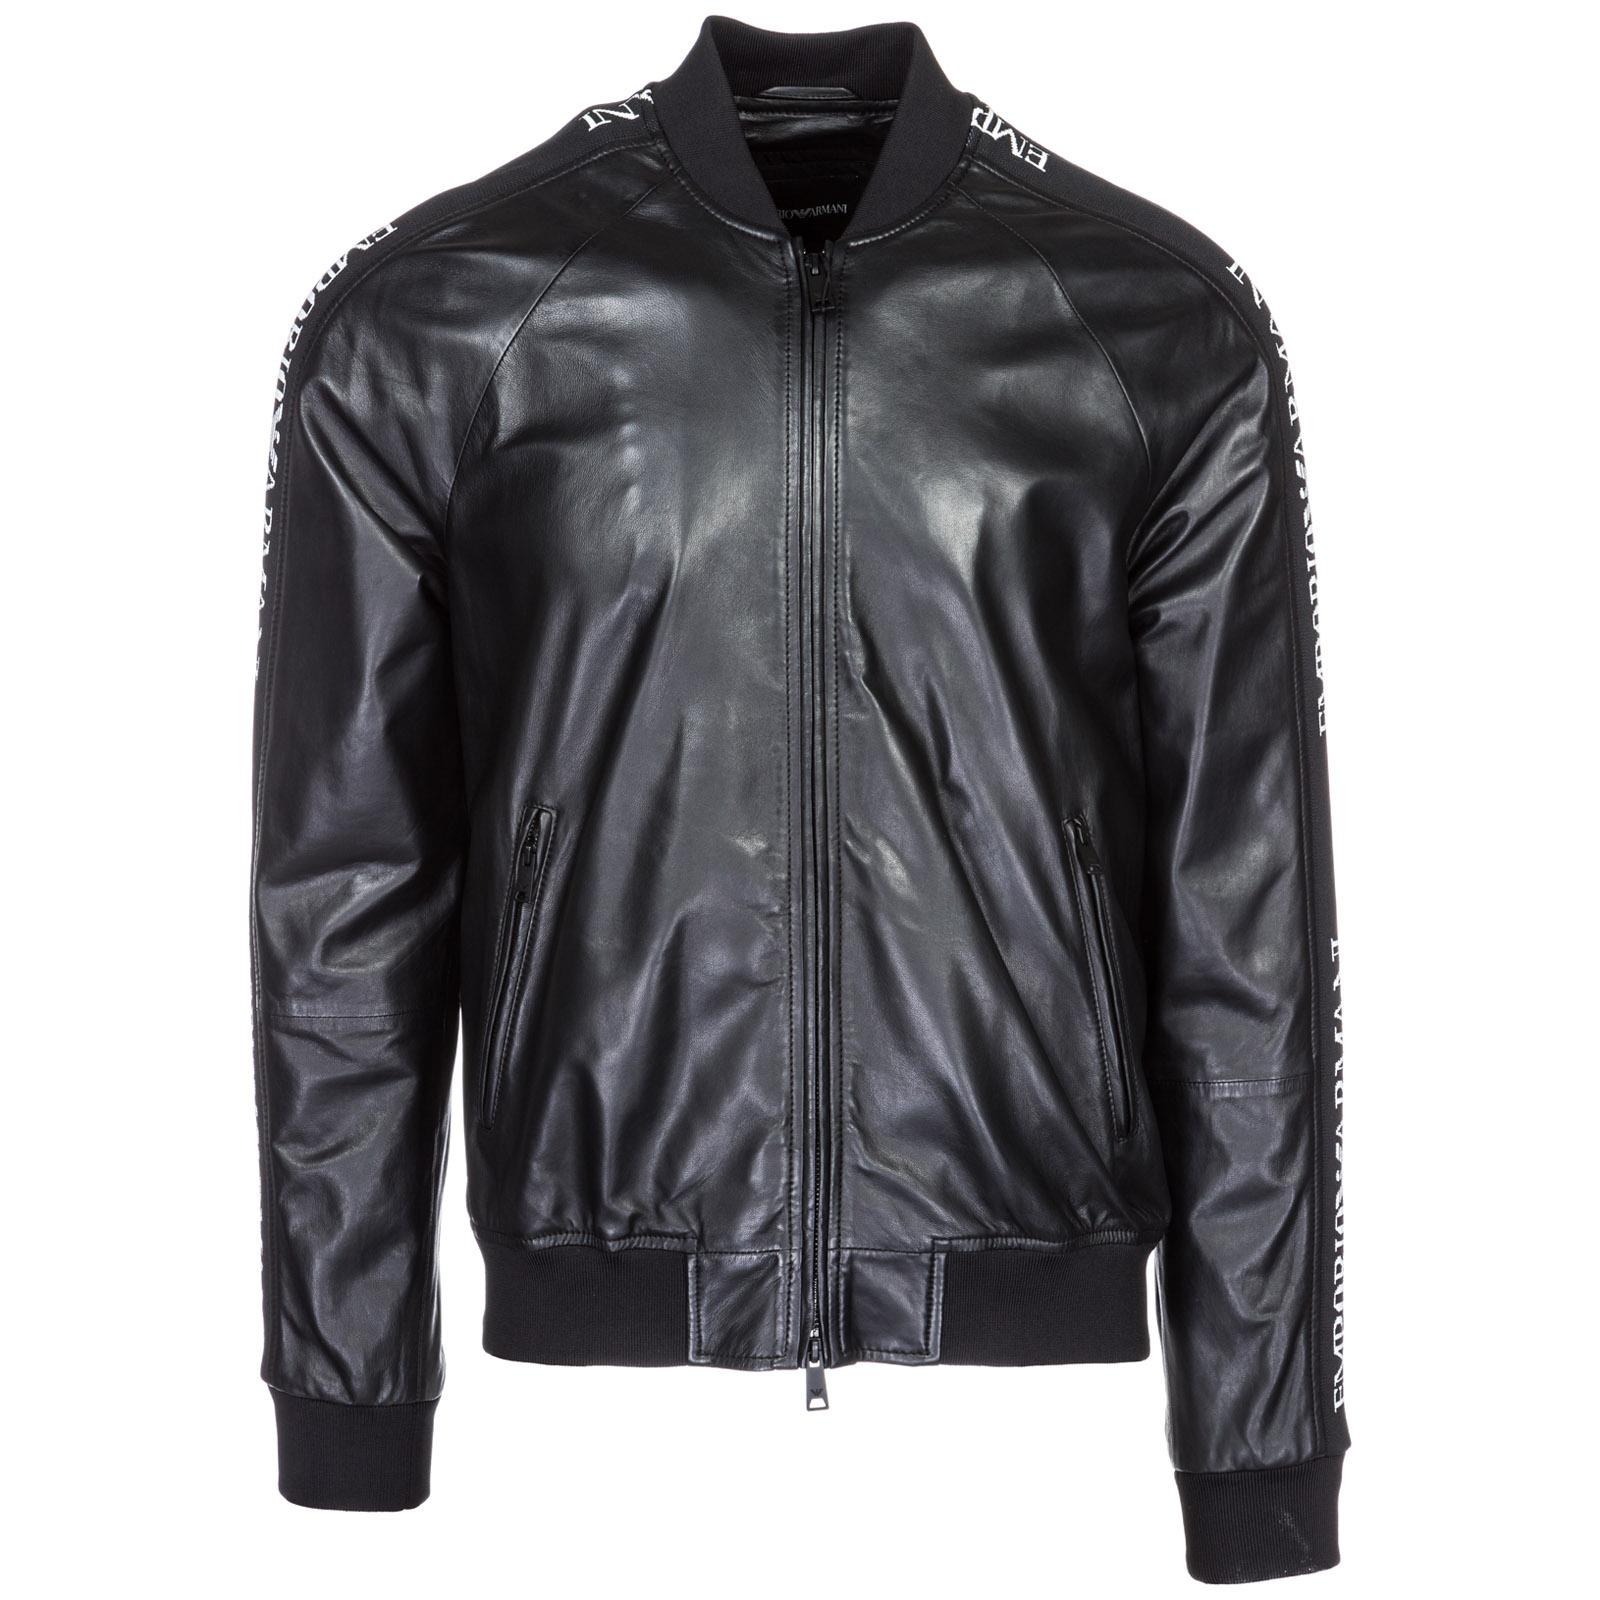 Lyst - Emporio Armani Leather Outerwear Jacket Blouson in Black for Men